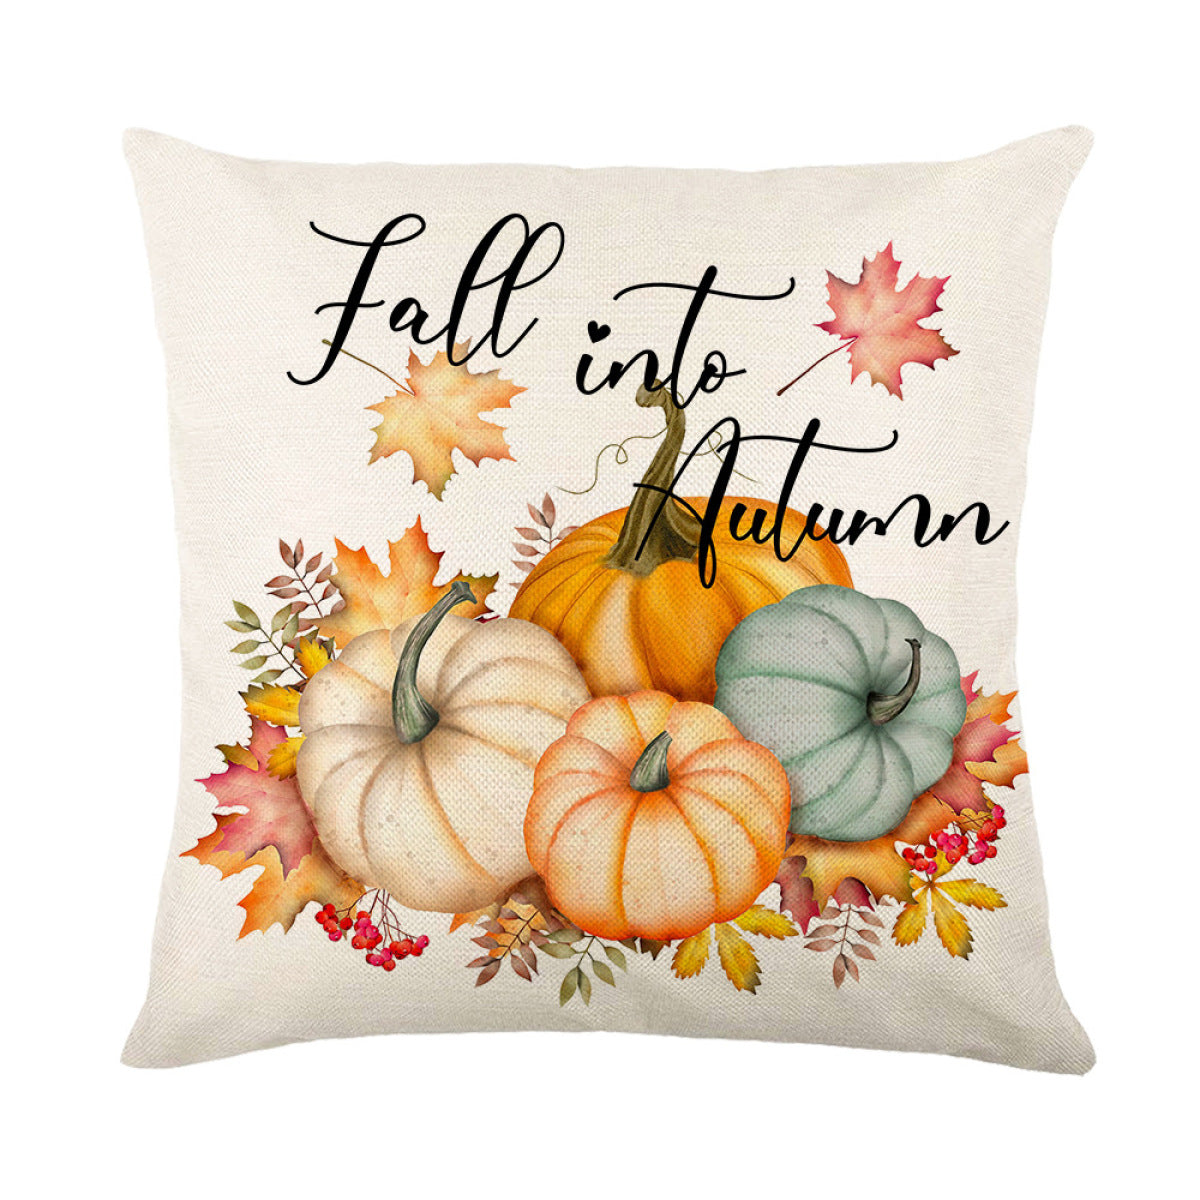 Pumpkin Print Pillowcases Without Filler